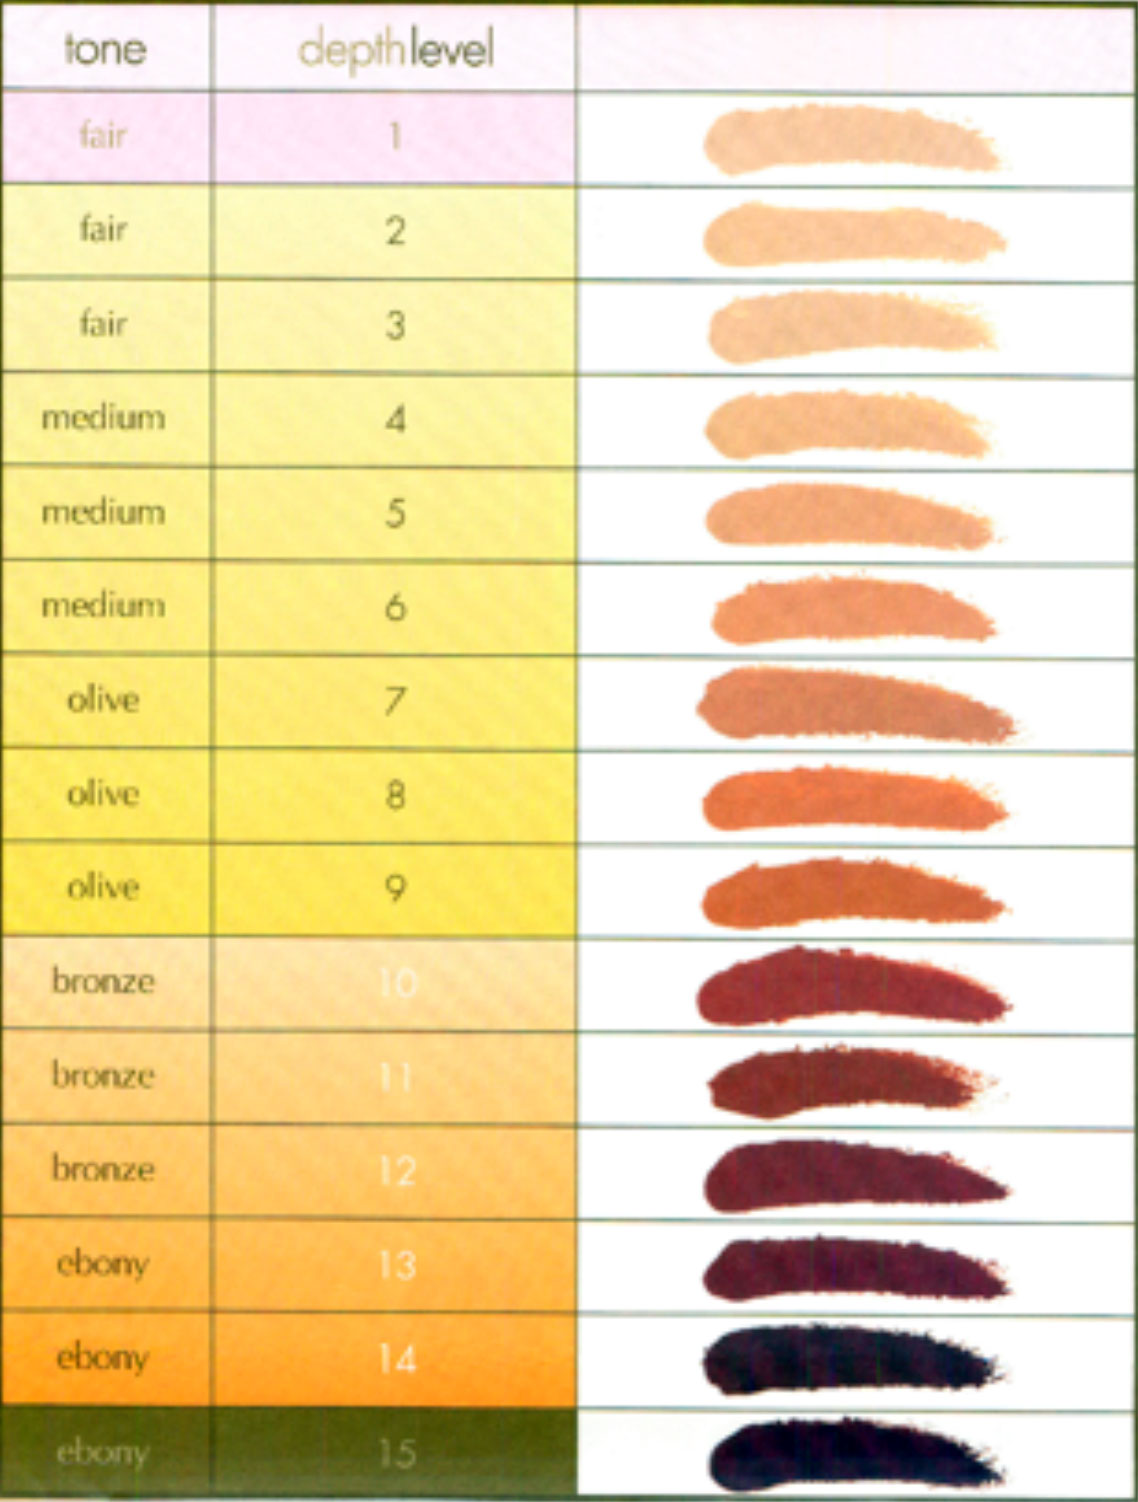 Skin depth chart